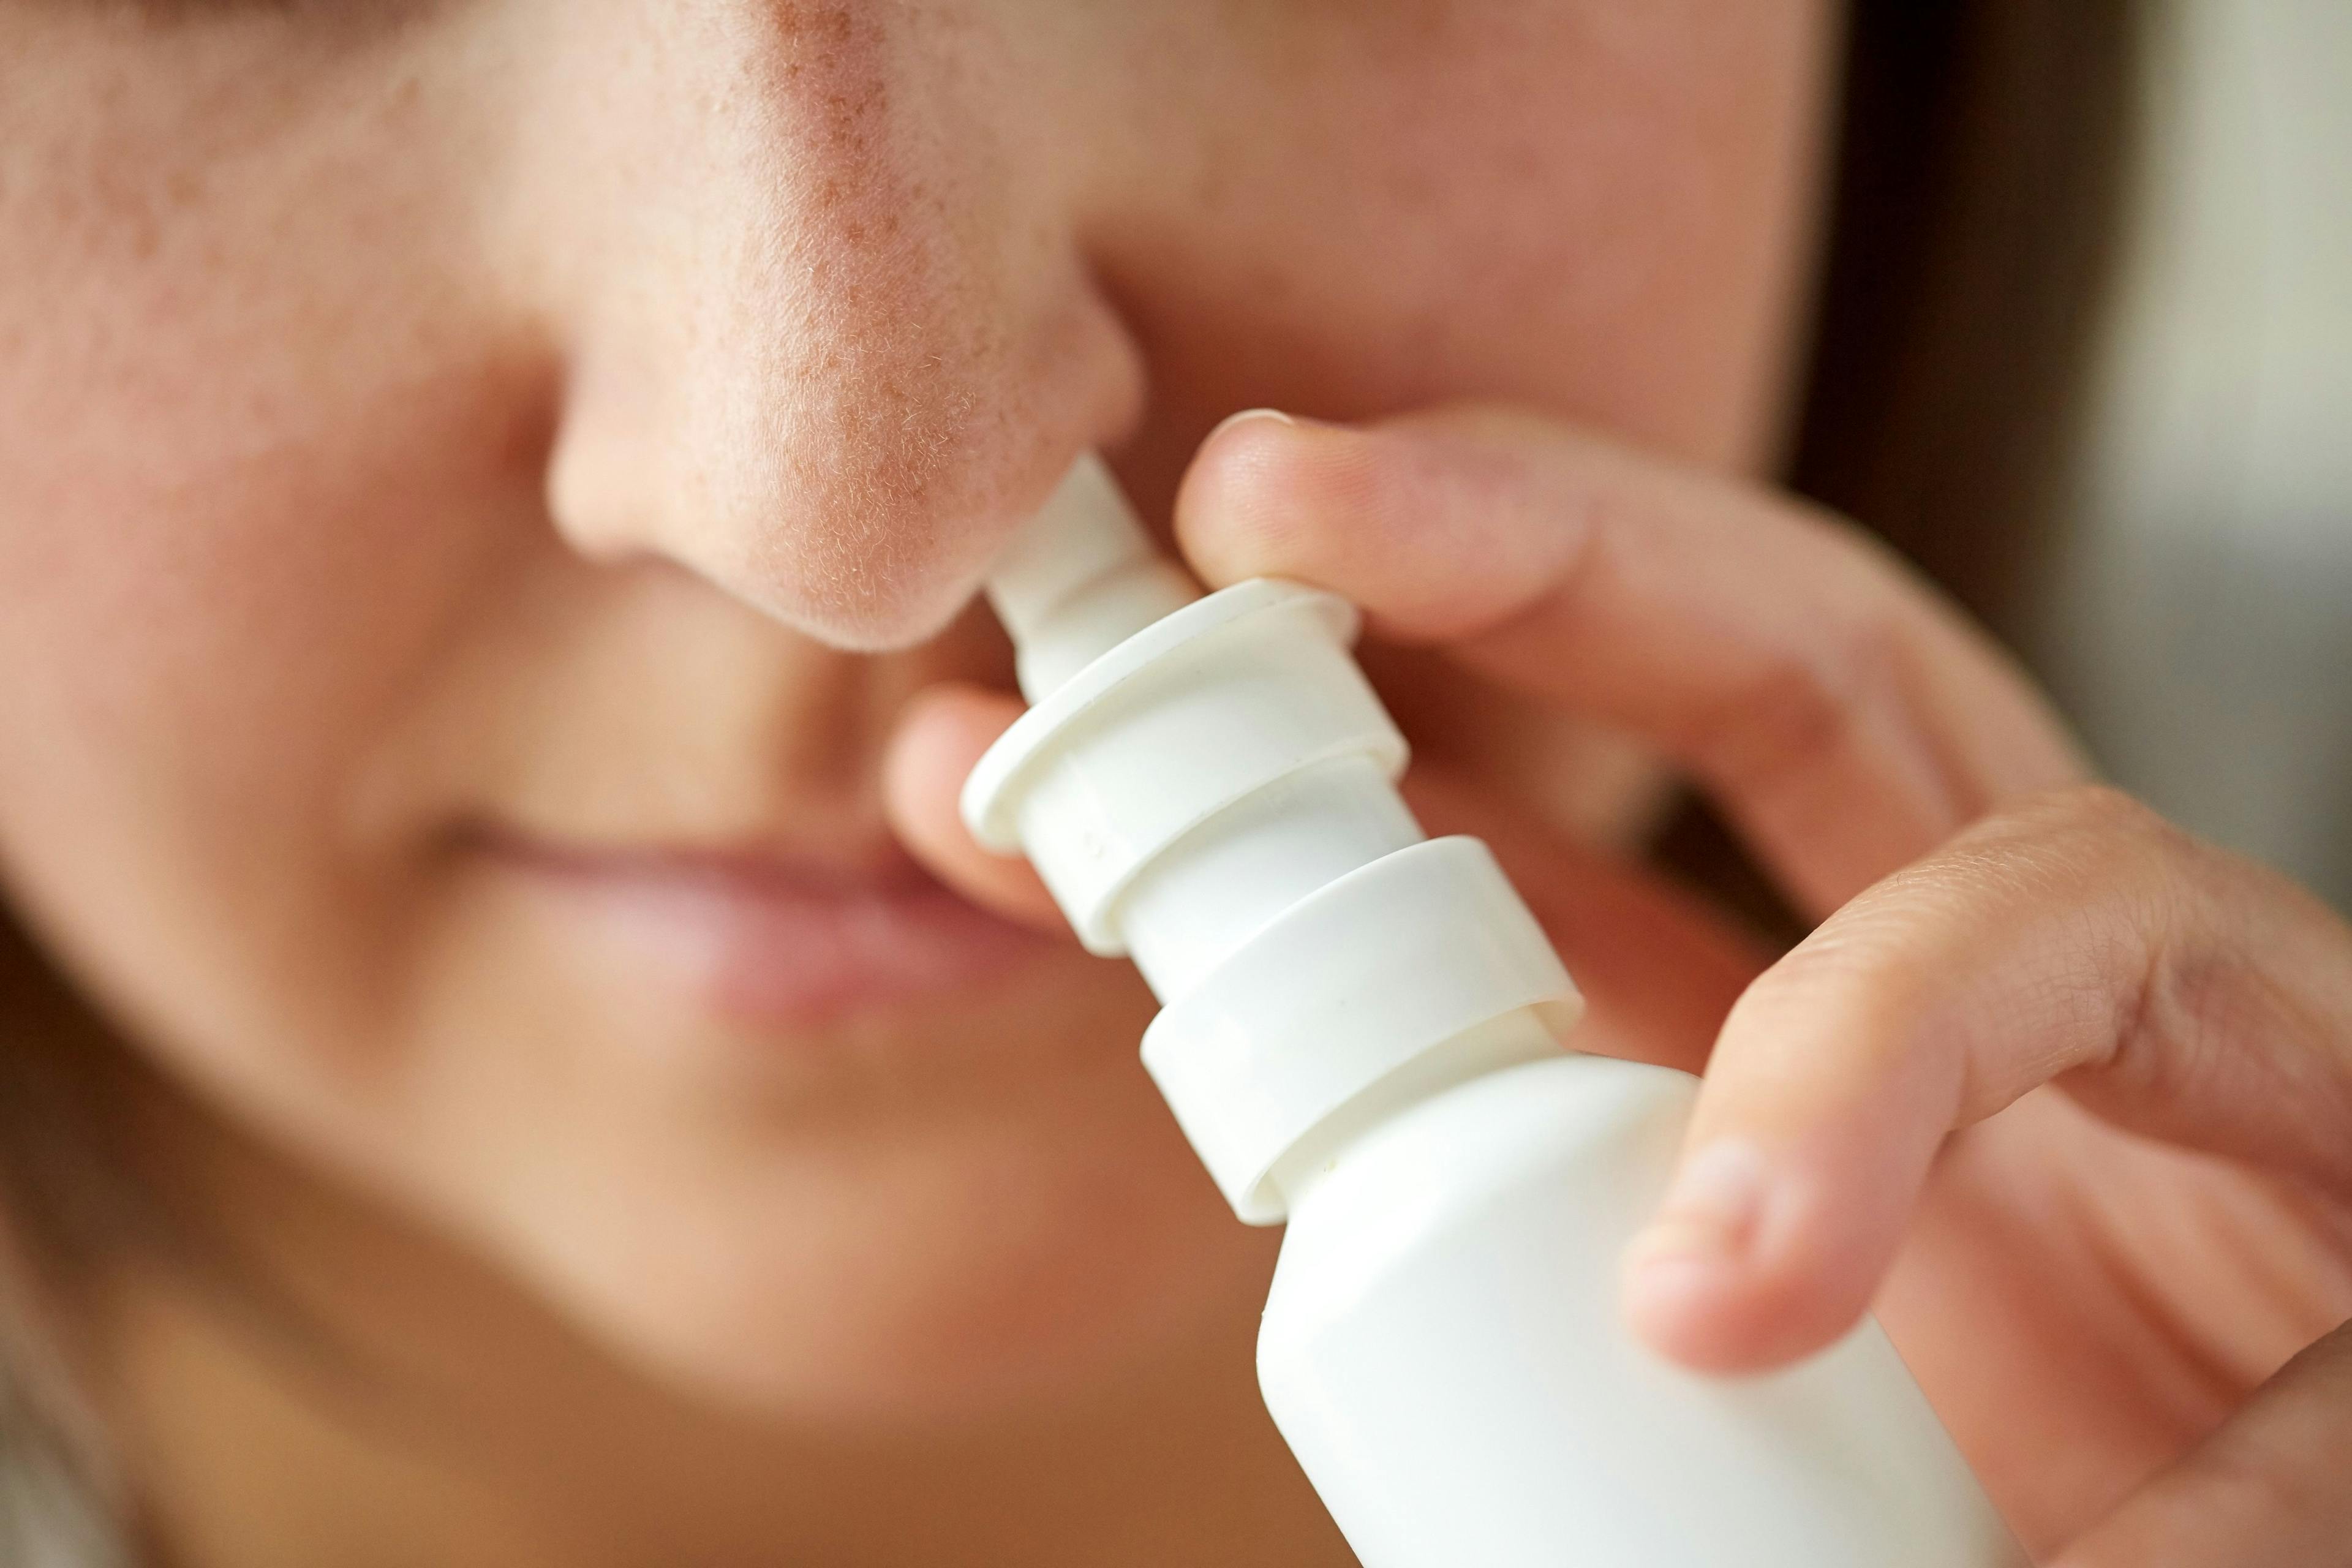 Critical Nasal Spray Supplies Restored, but Coverage Still A Challenge